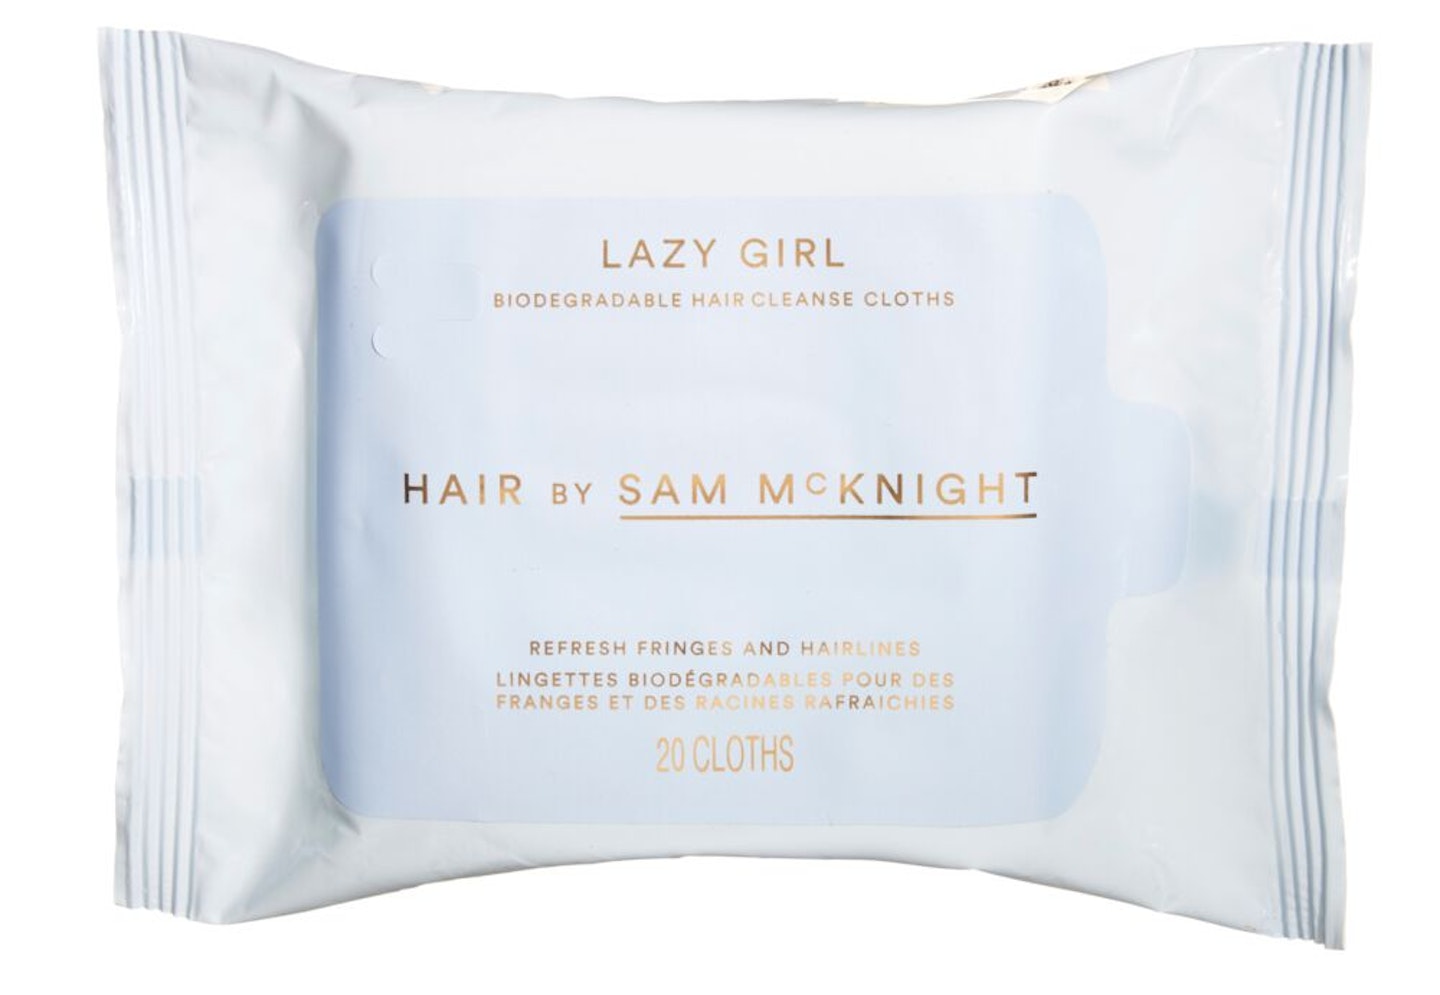 Hair by Sam McKnight Lazy Girl Biodegradable Cleanse Cloths